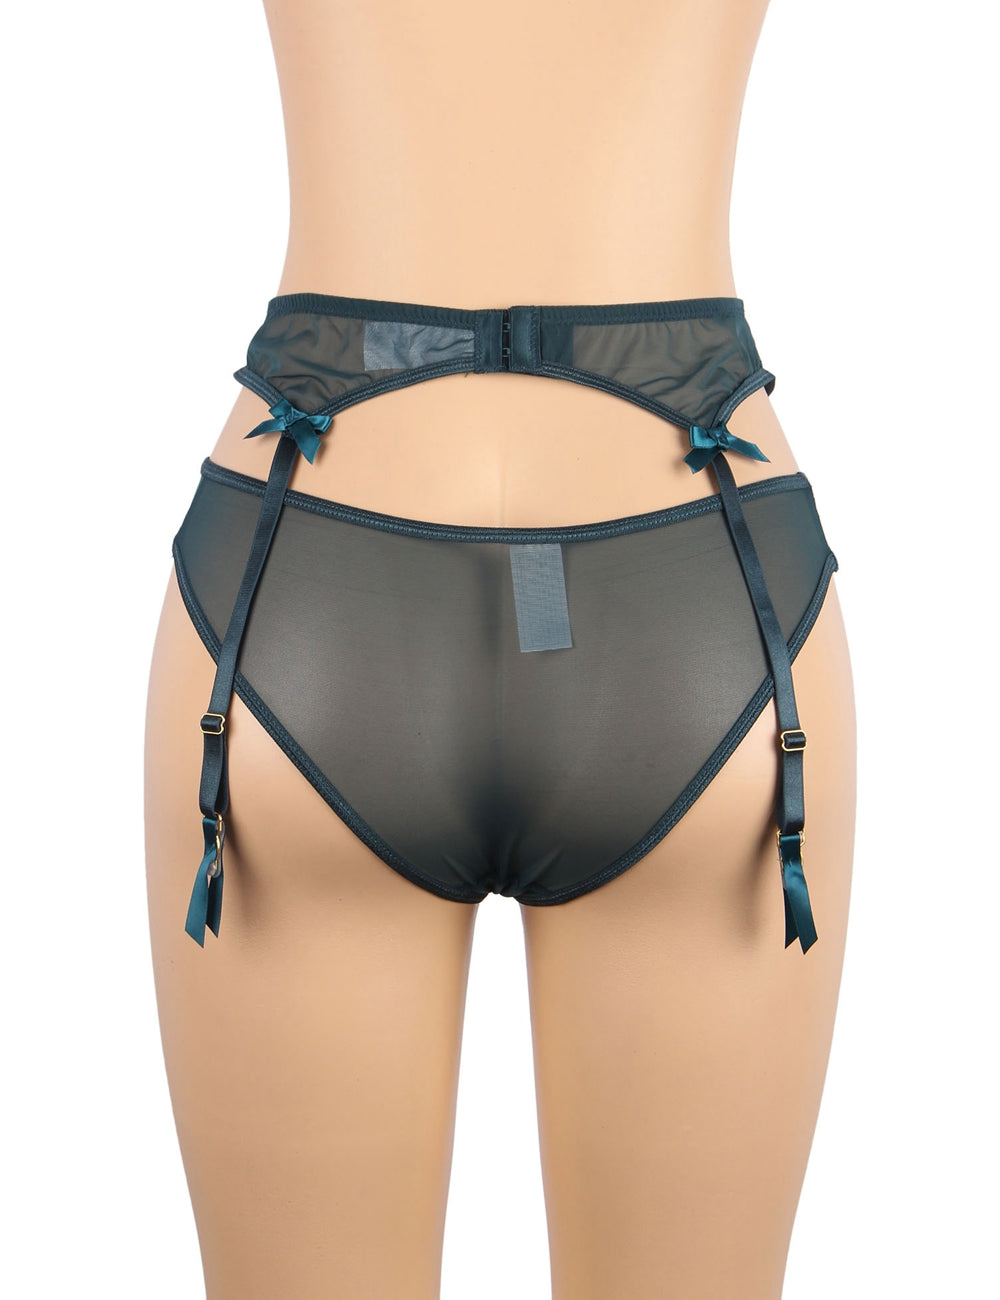 Women's Sexy Panties Wholesale Plus Size Garter Underwear